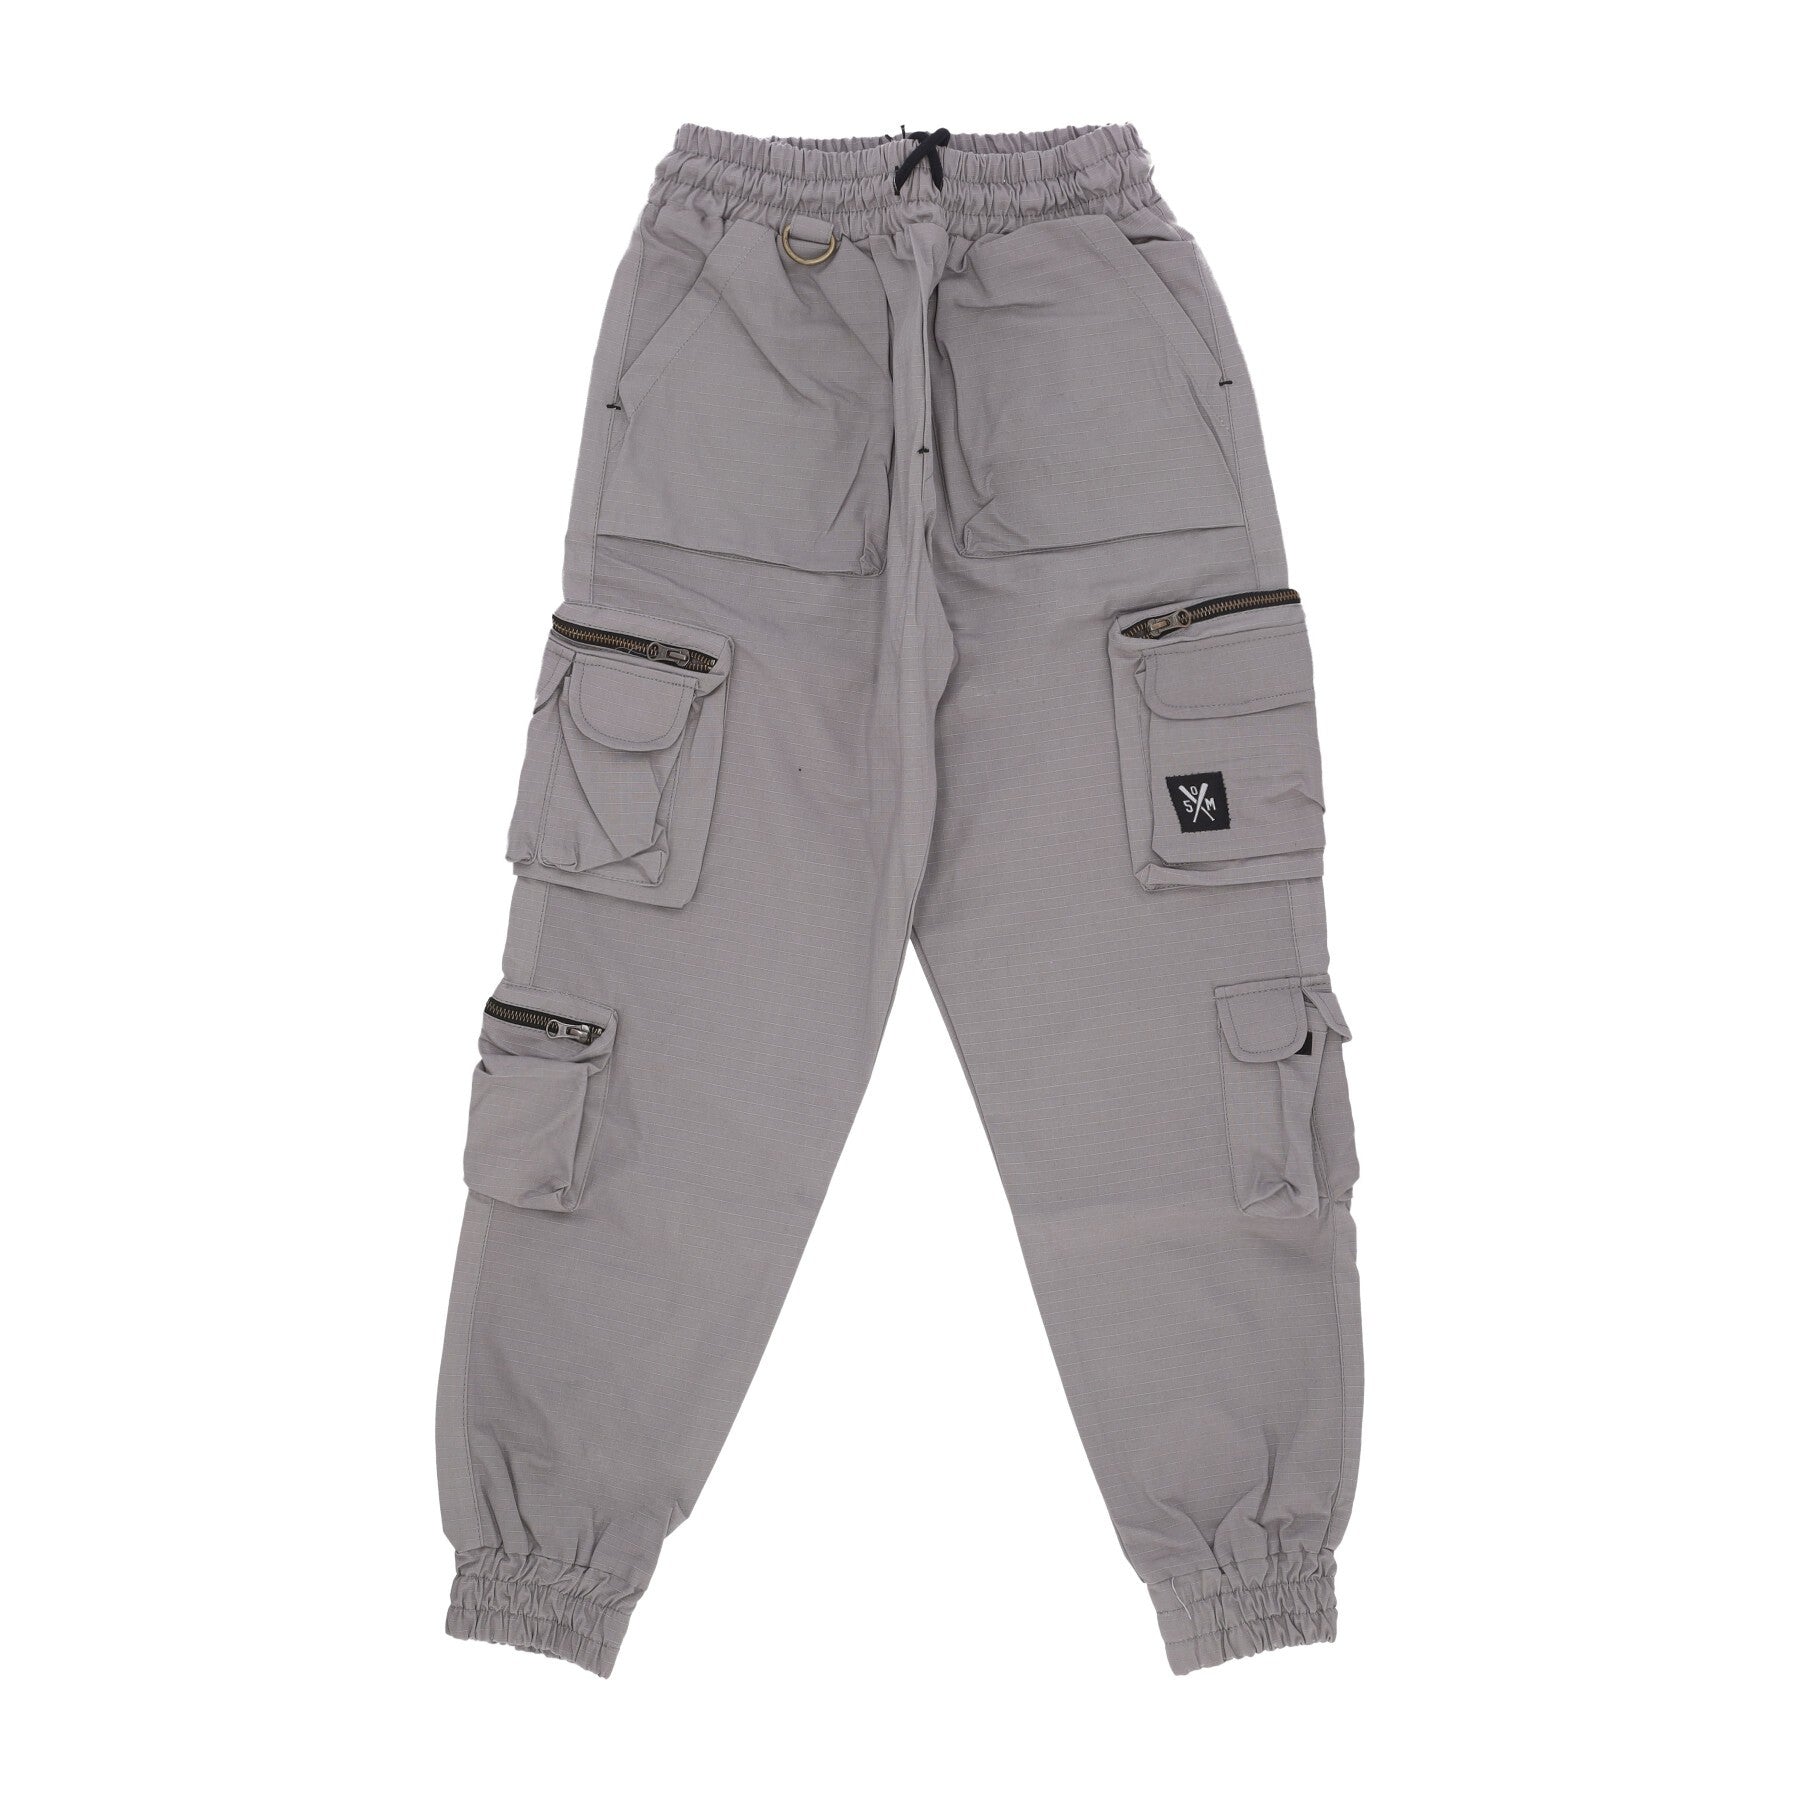 Retrofuture Cargo Pants Men's Long Pants Grey